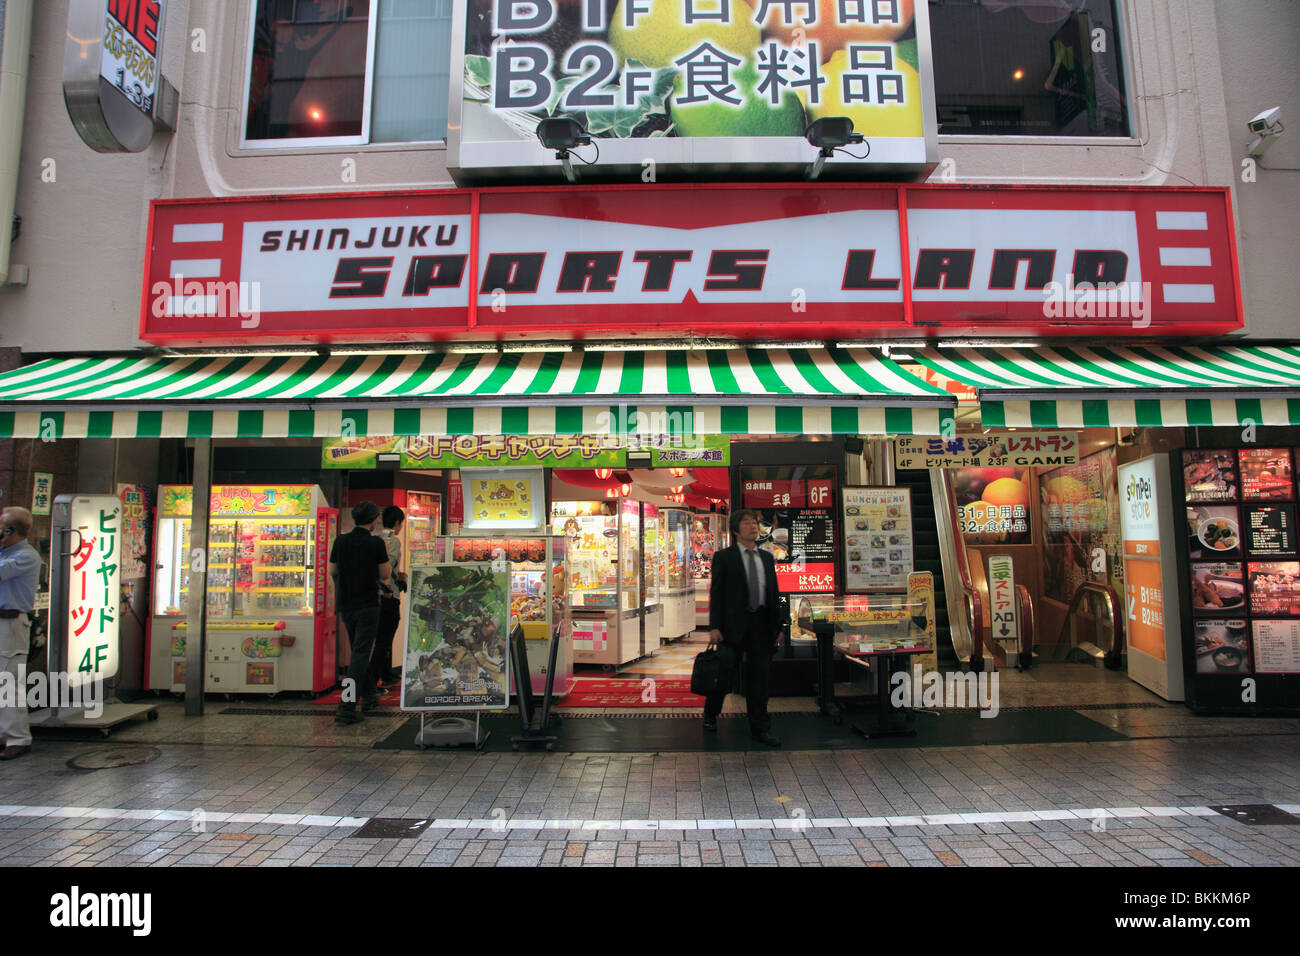 Game arcade, Shinjuku, Tokyo, Japan, Asia Stock Photo